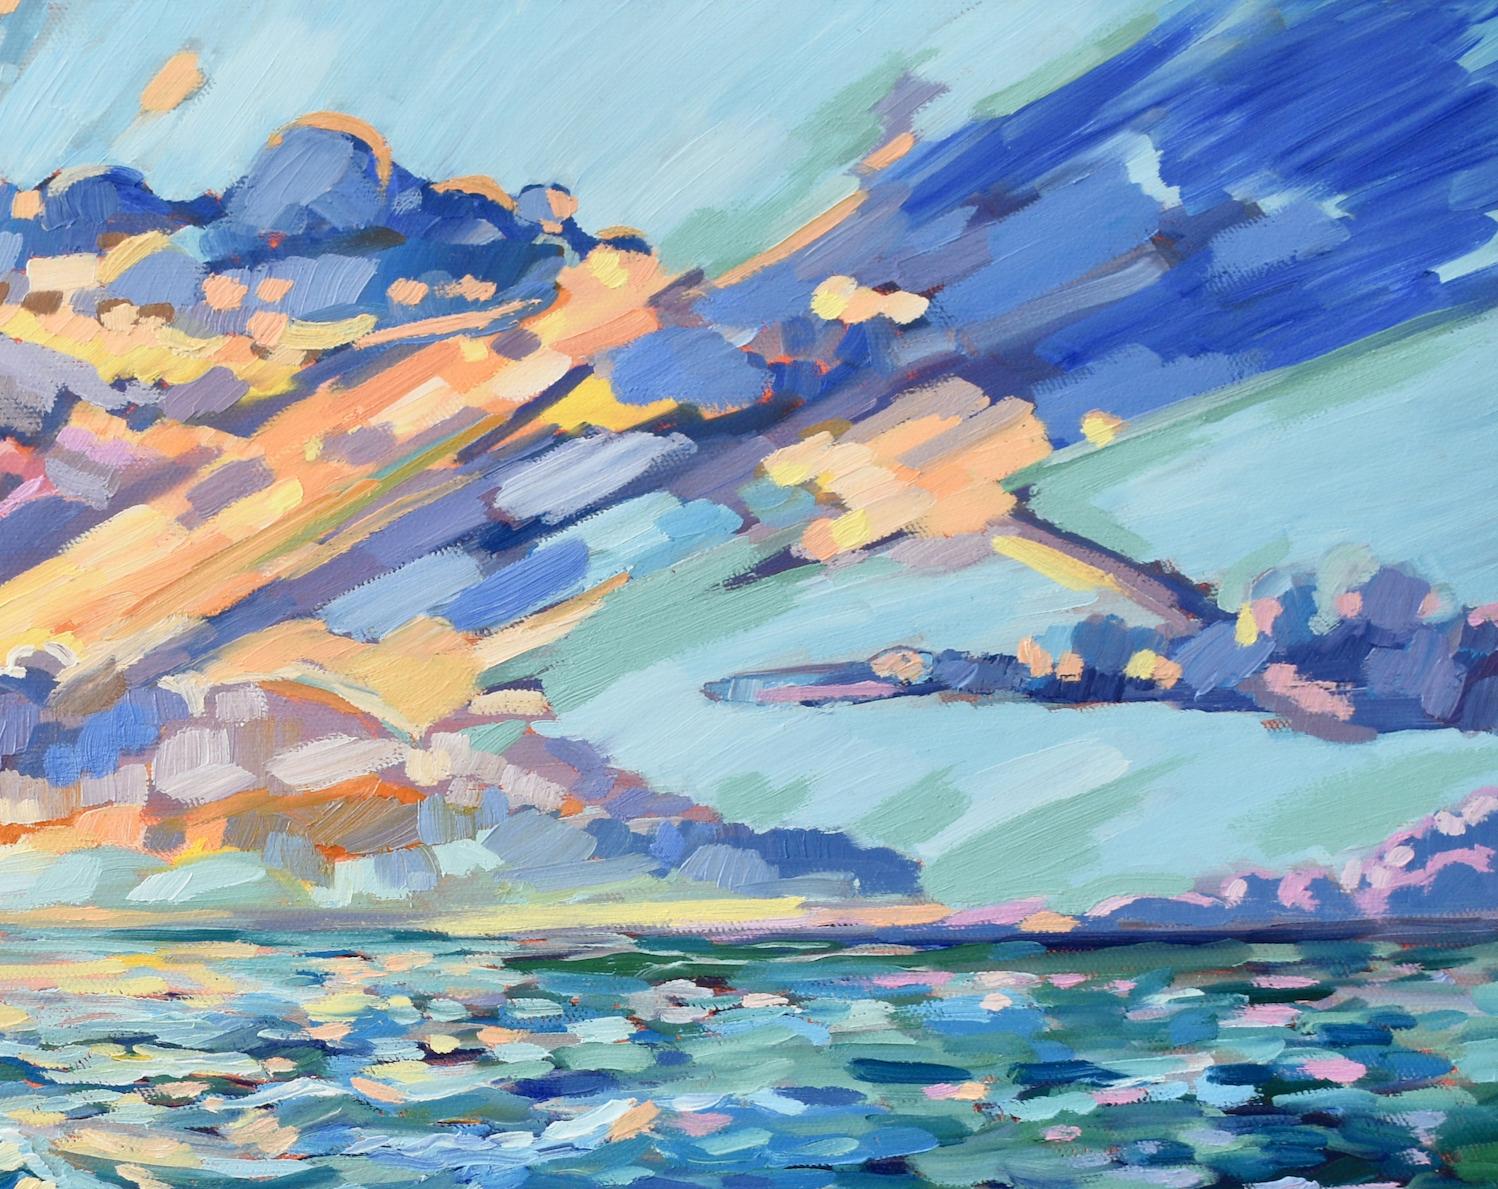 Gulf Coast Paradise, Original Contemporary Impressionist Landscape Painting, 2022
18